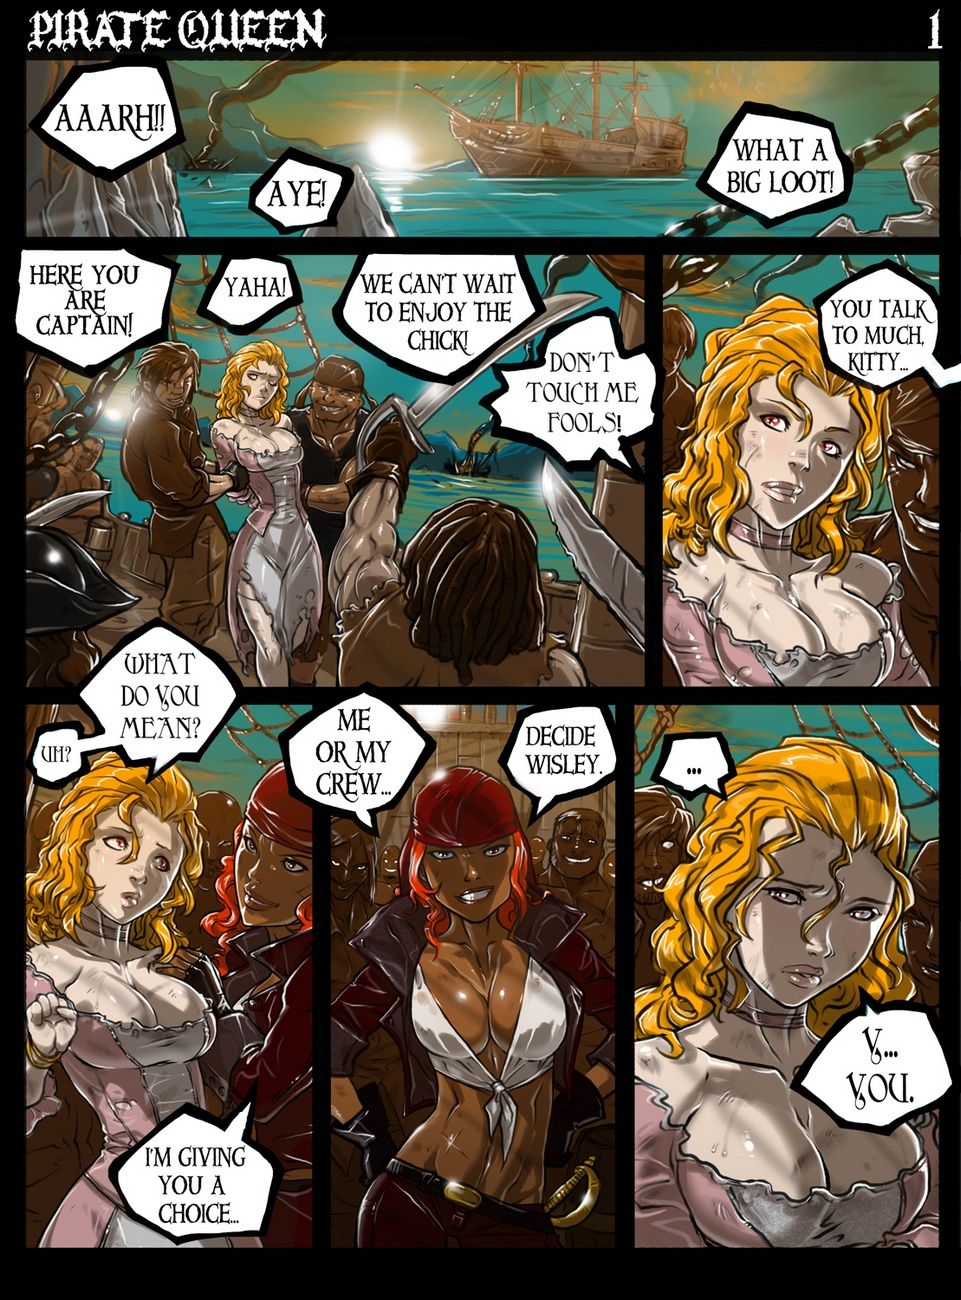 Piraten queen page 1